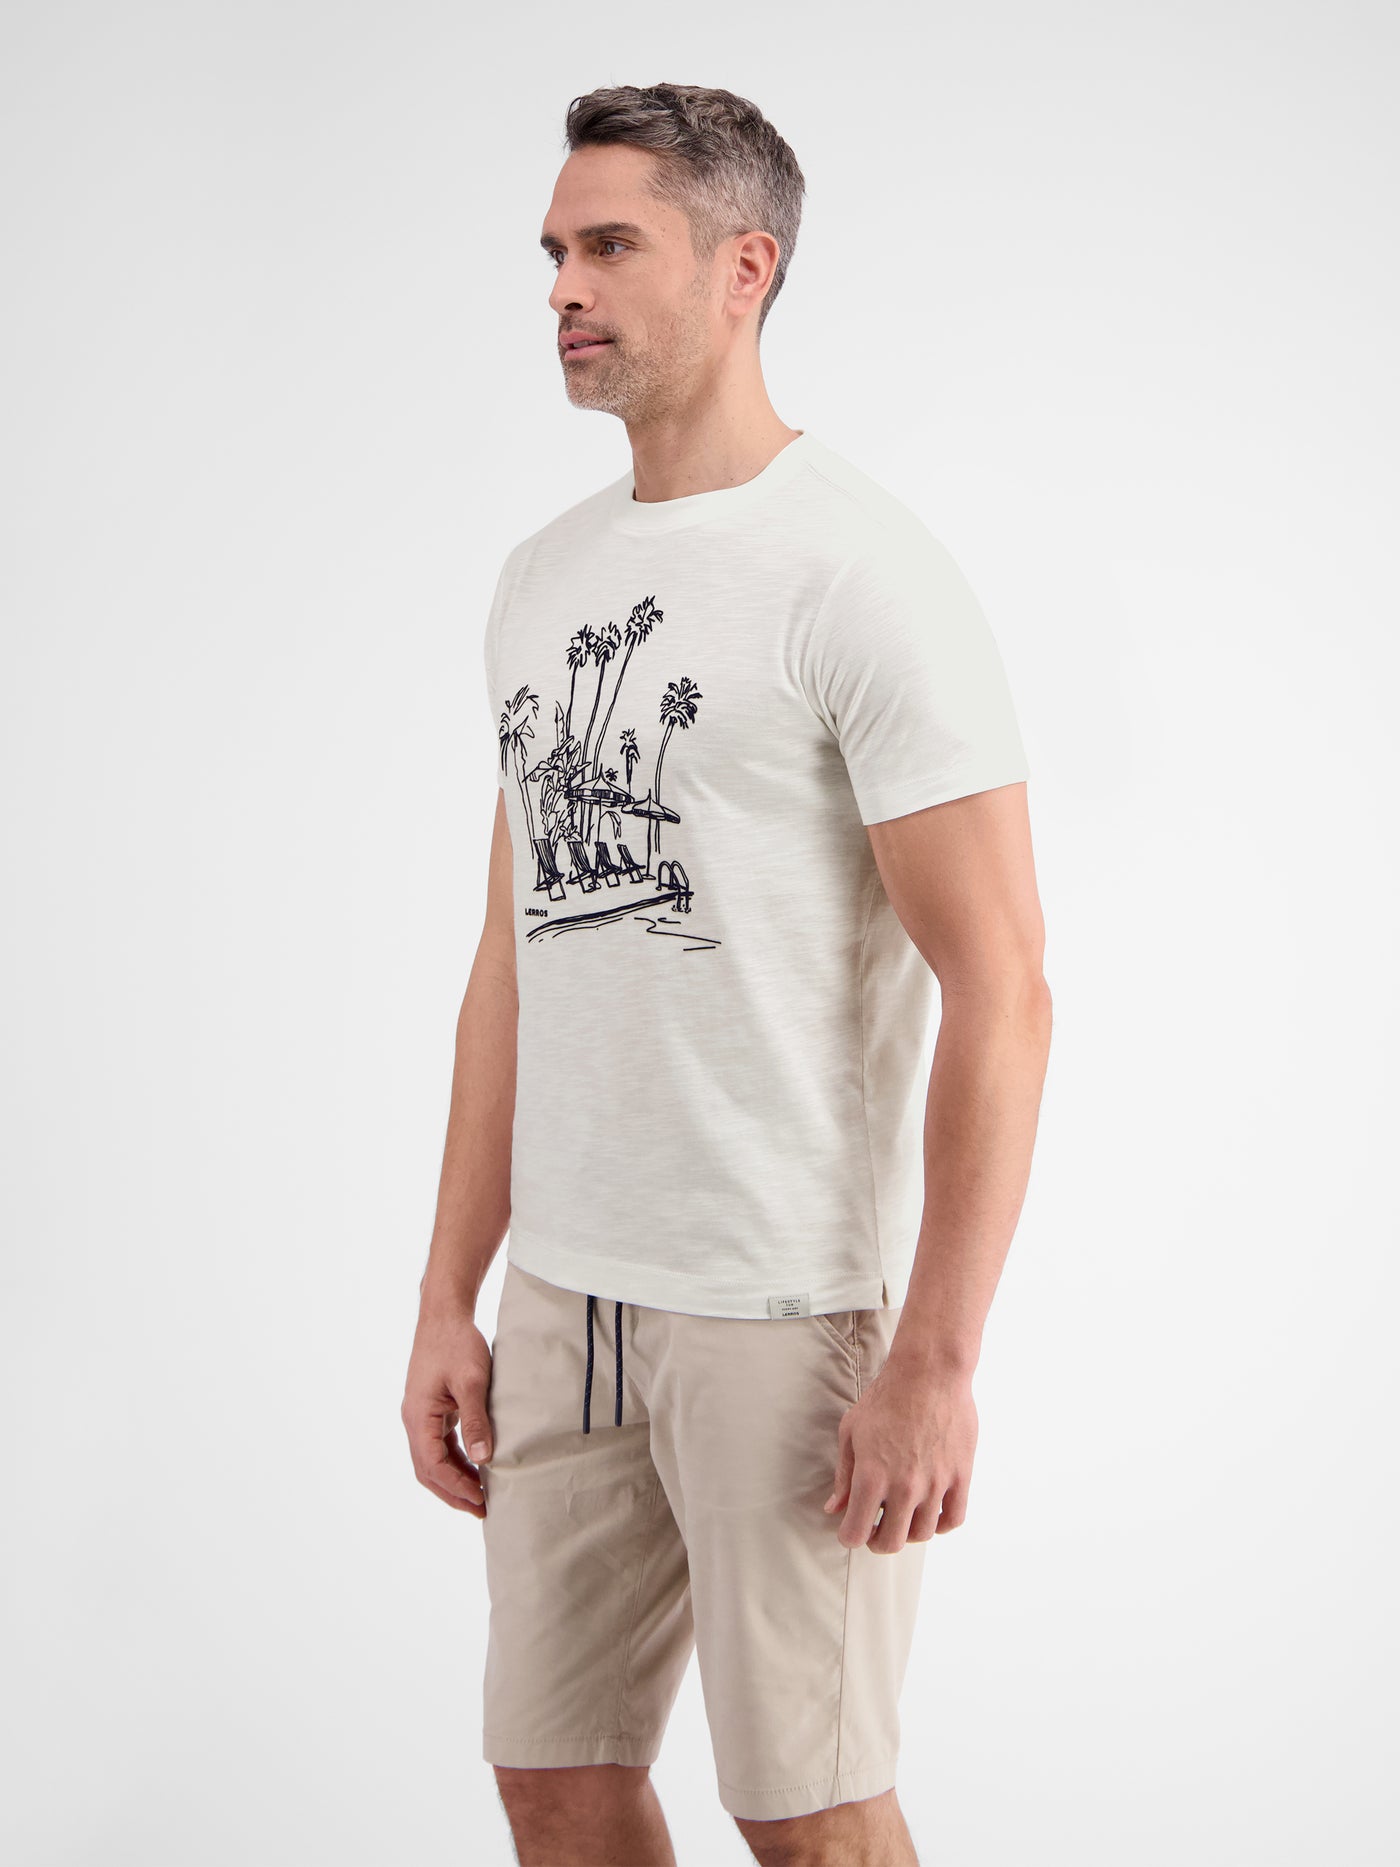 Men's T-shirt, manually designed front print